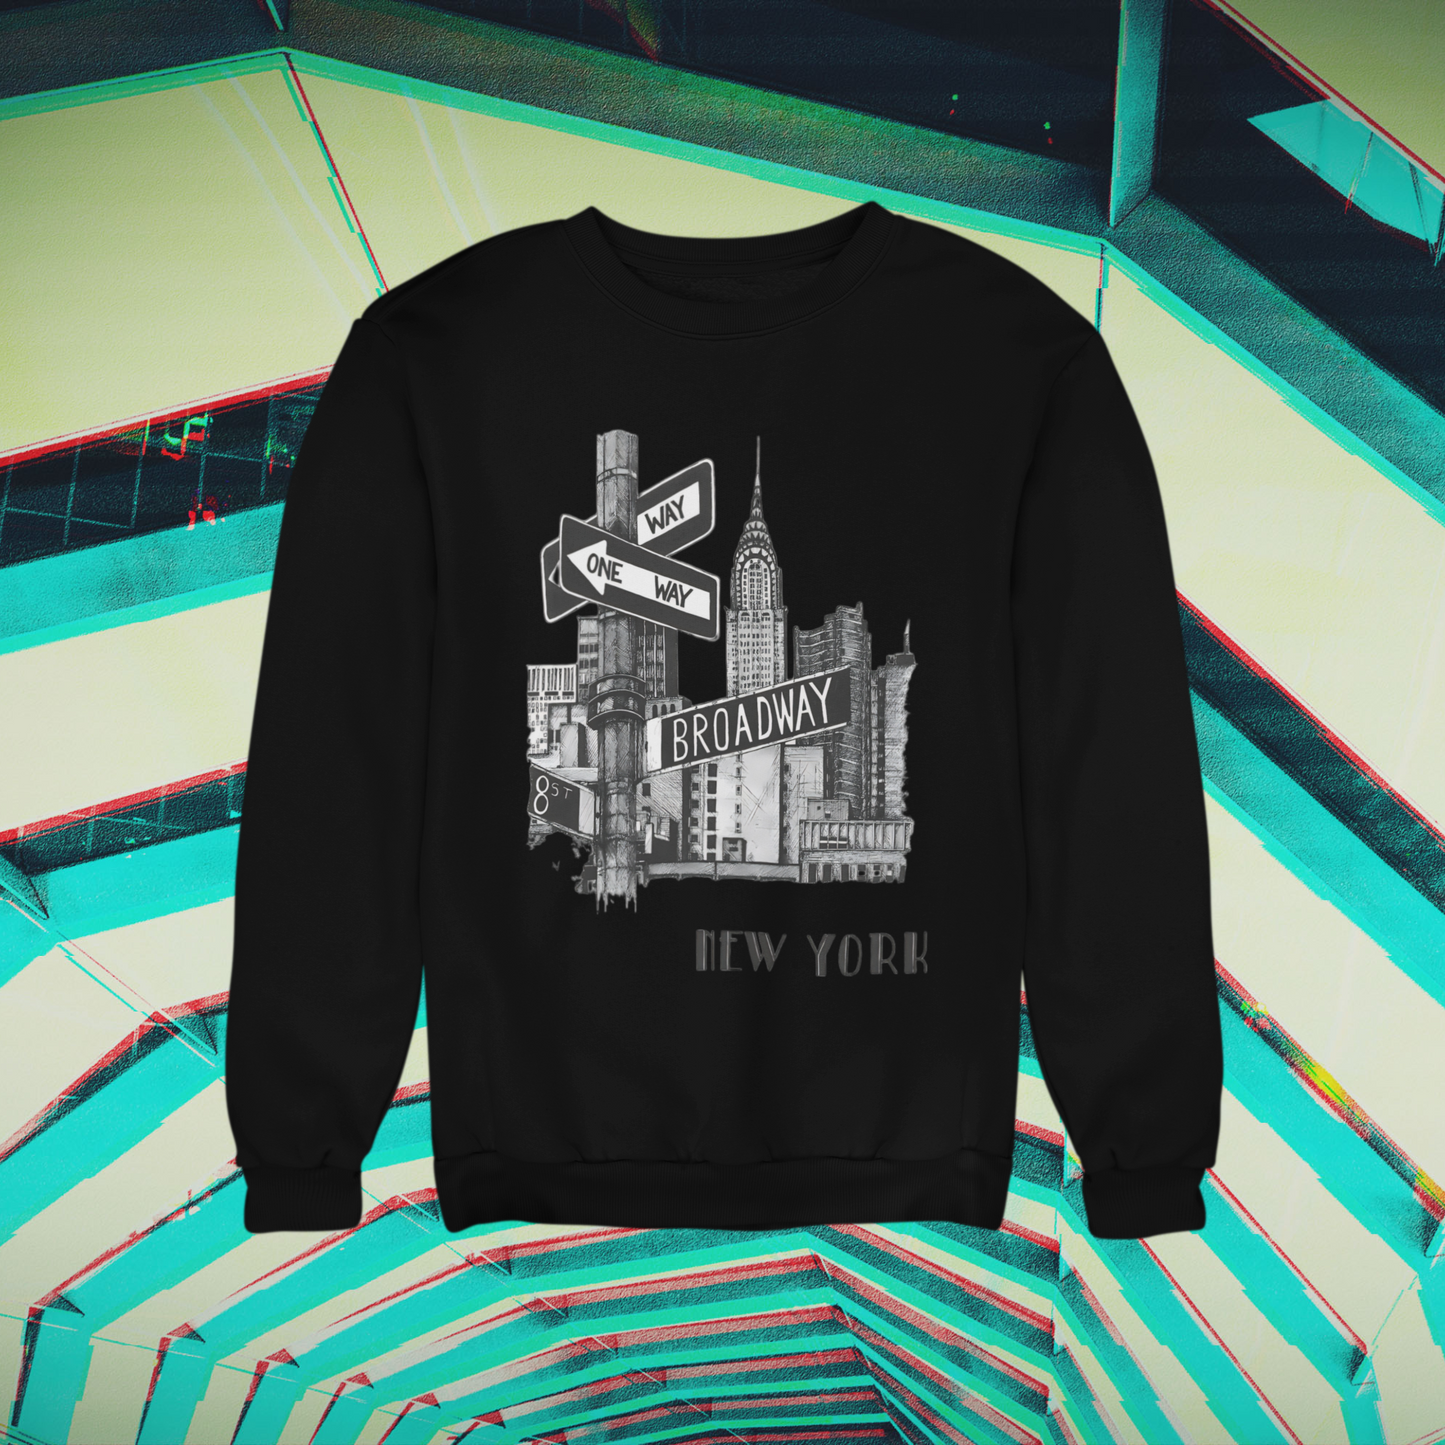 New York Oversized Sweatshirt